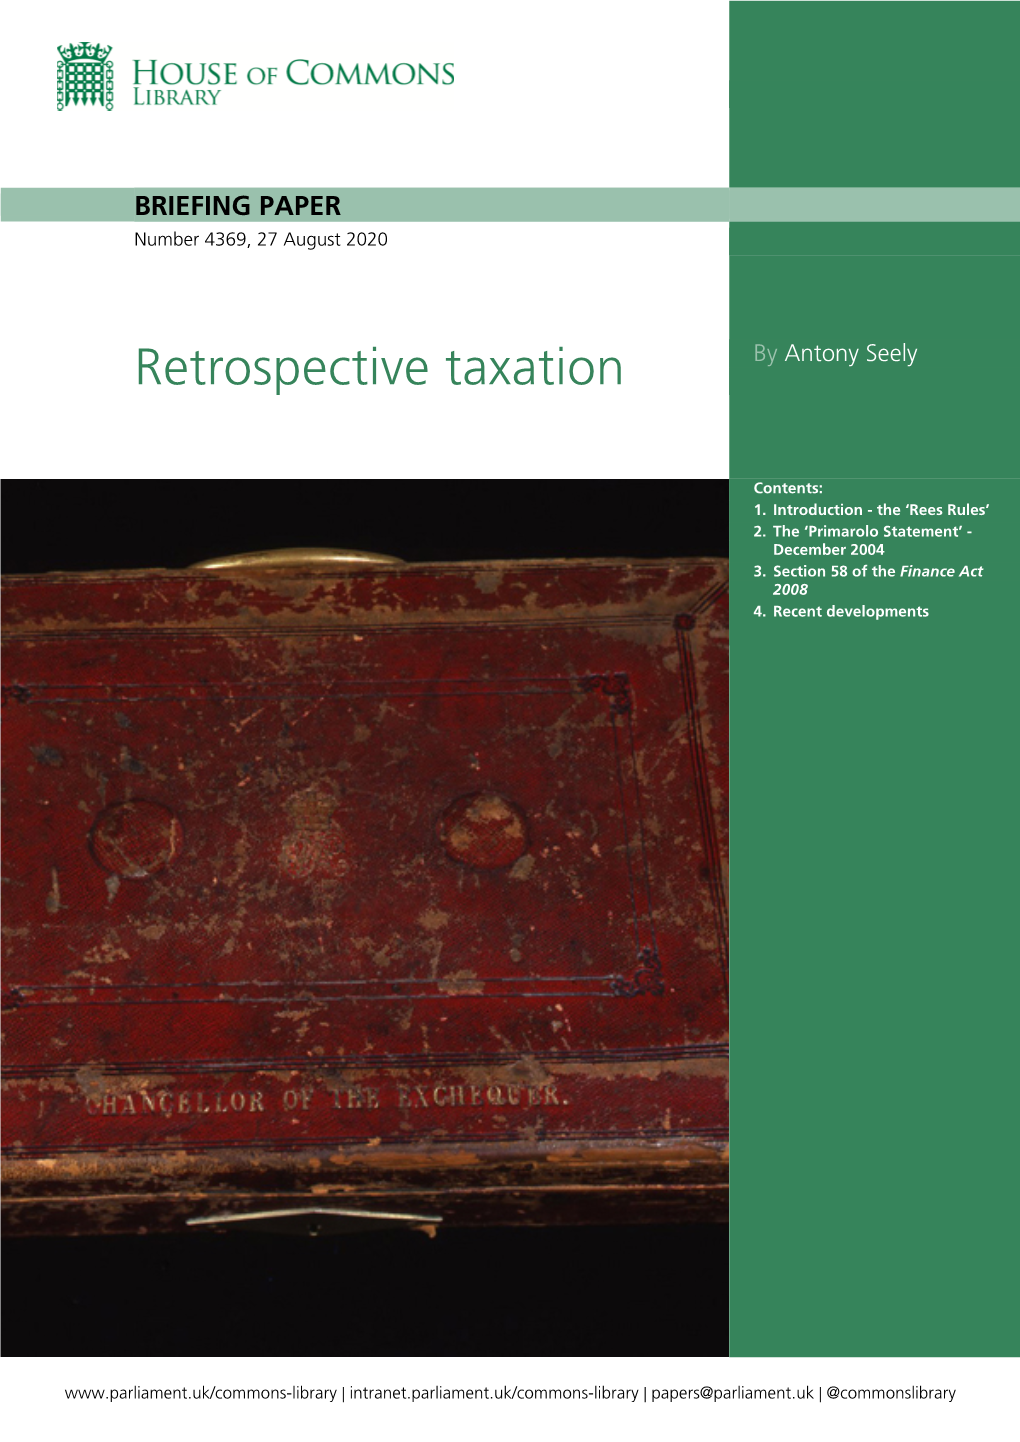 Retrospective Taxation